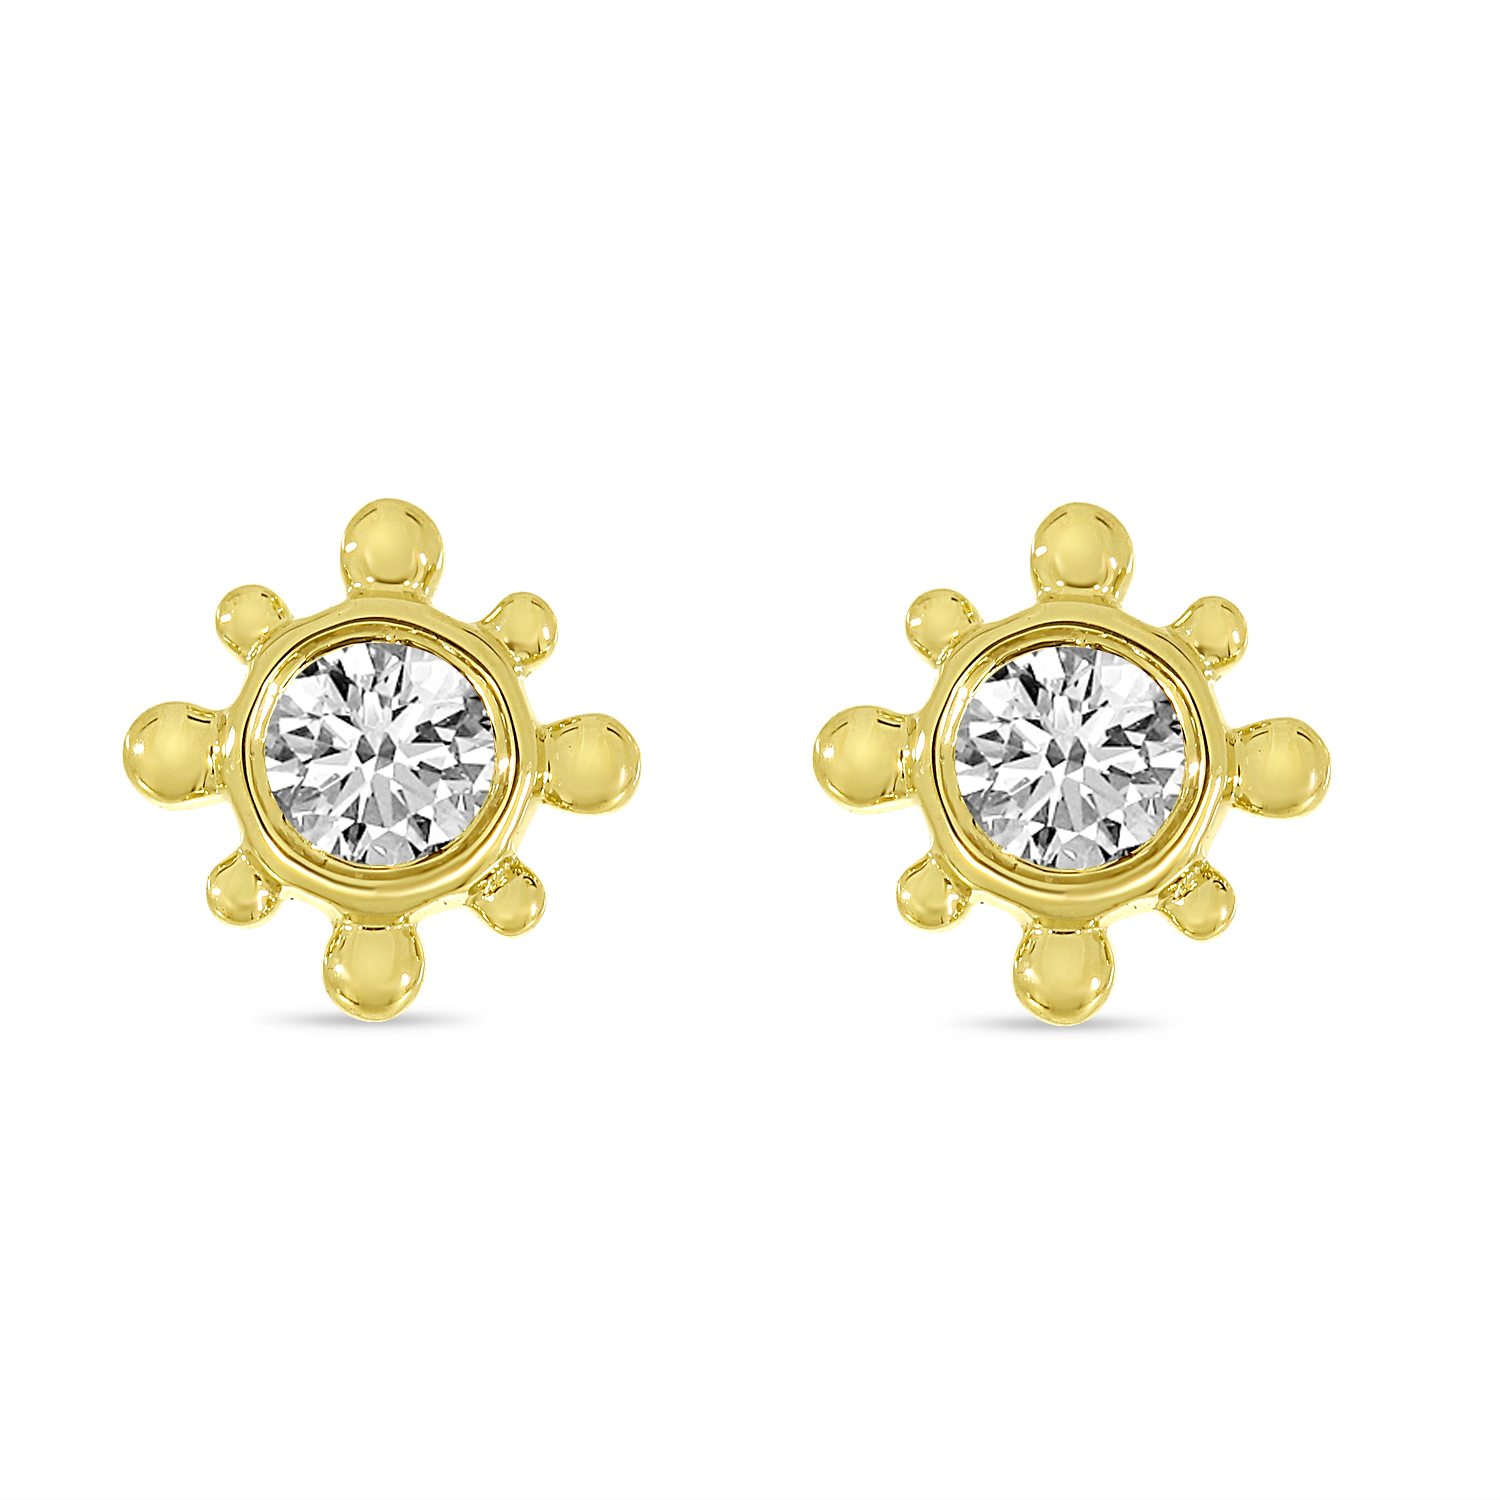 14K Yellow Gold Petite Diamond Beaded Stud Earrings